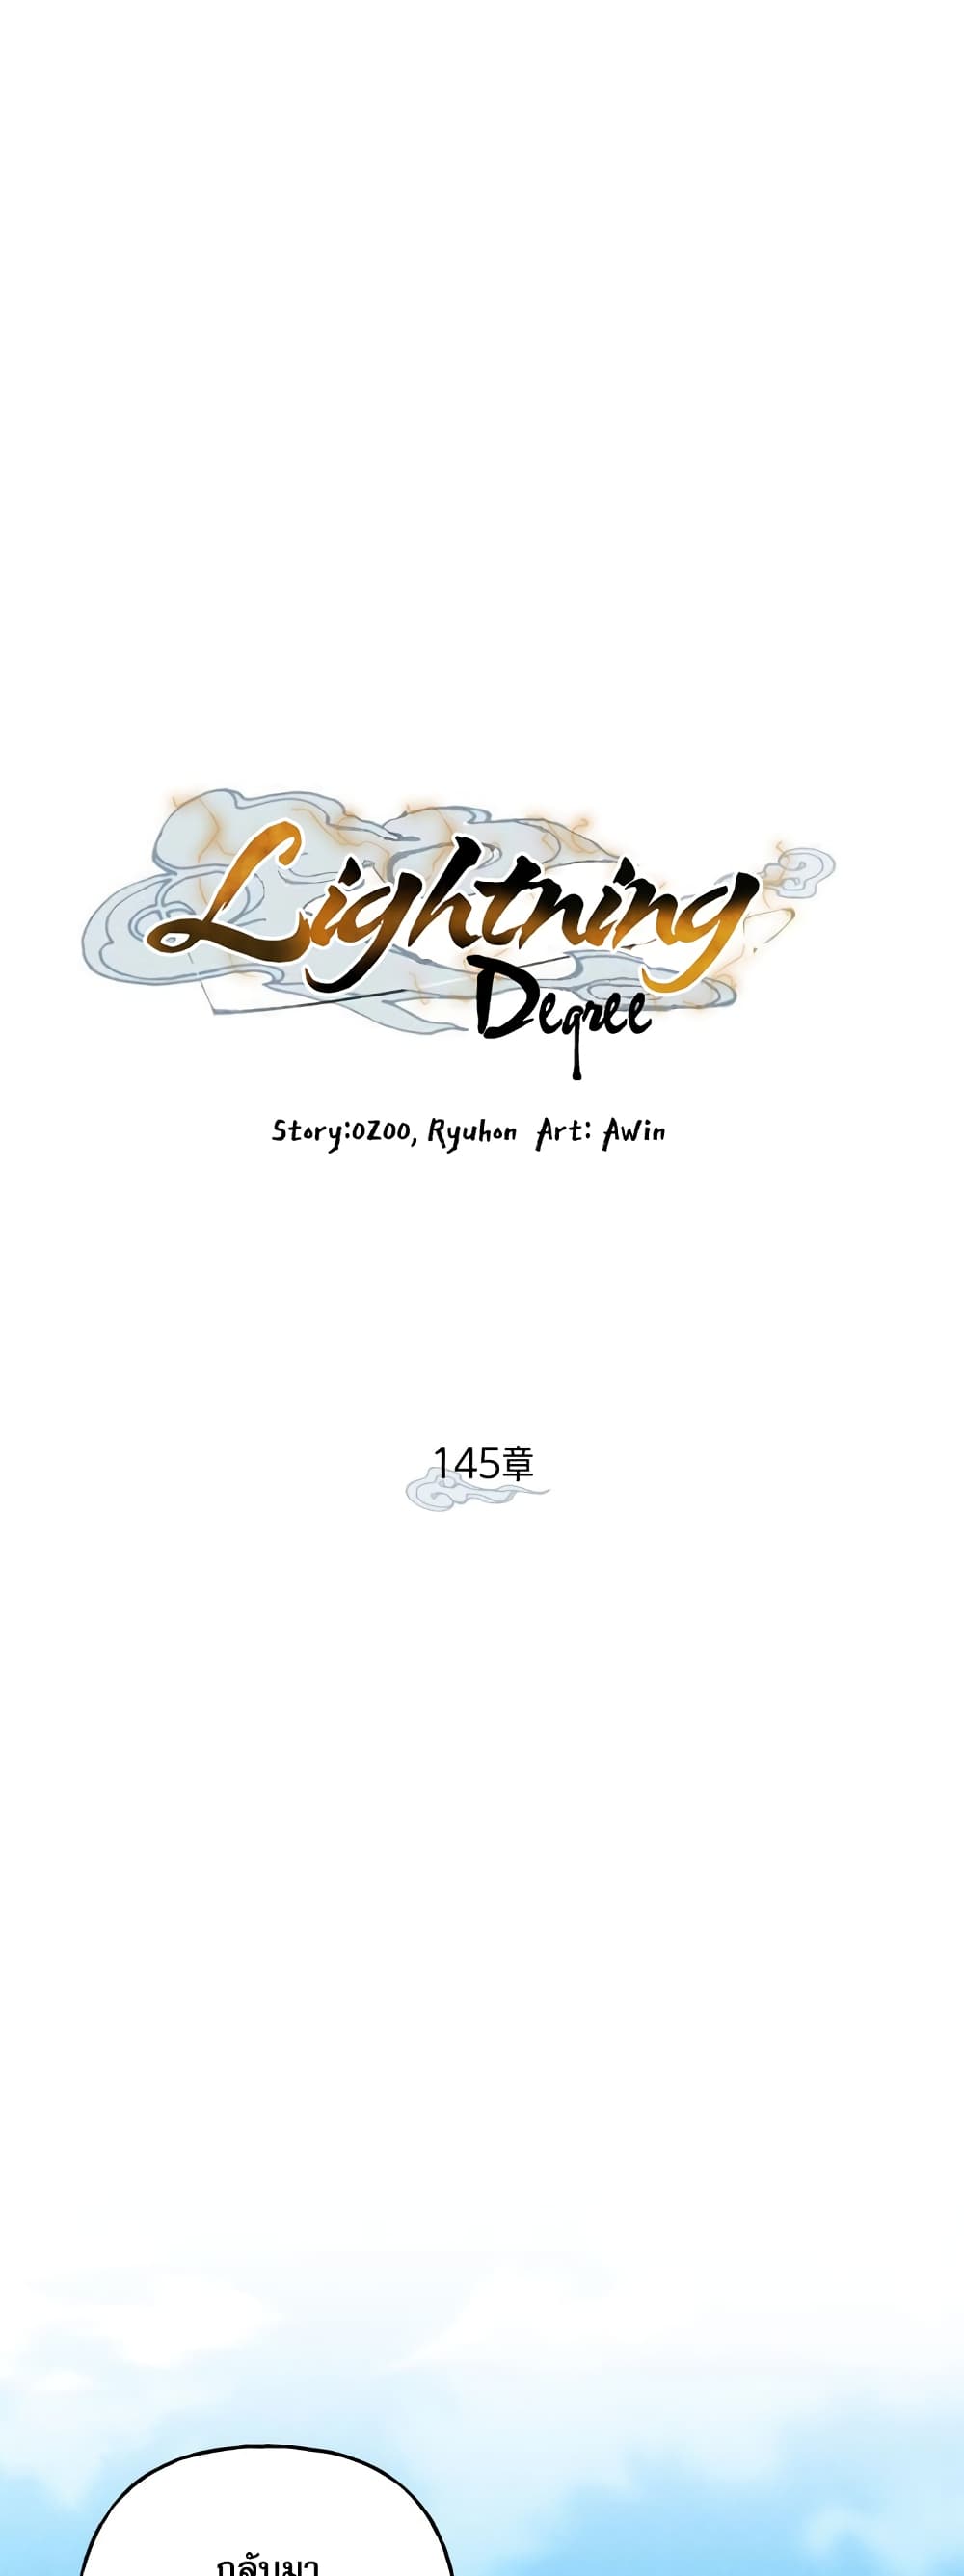 Lightning Degree 145-145